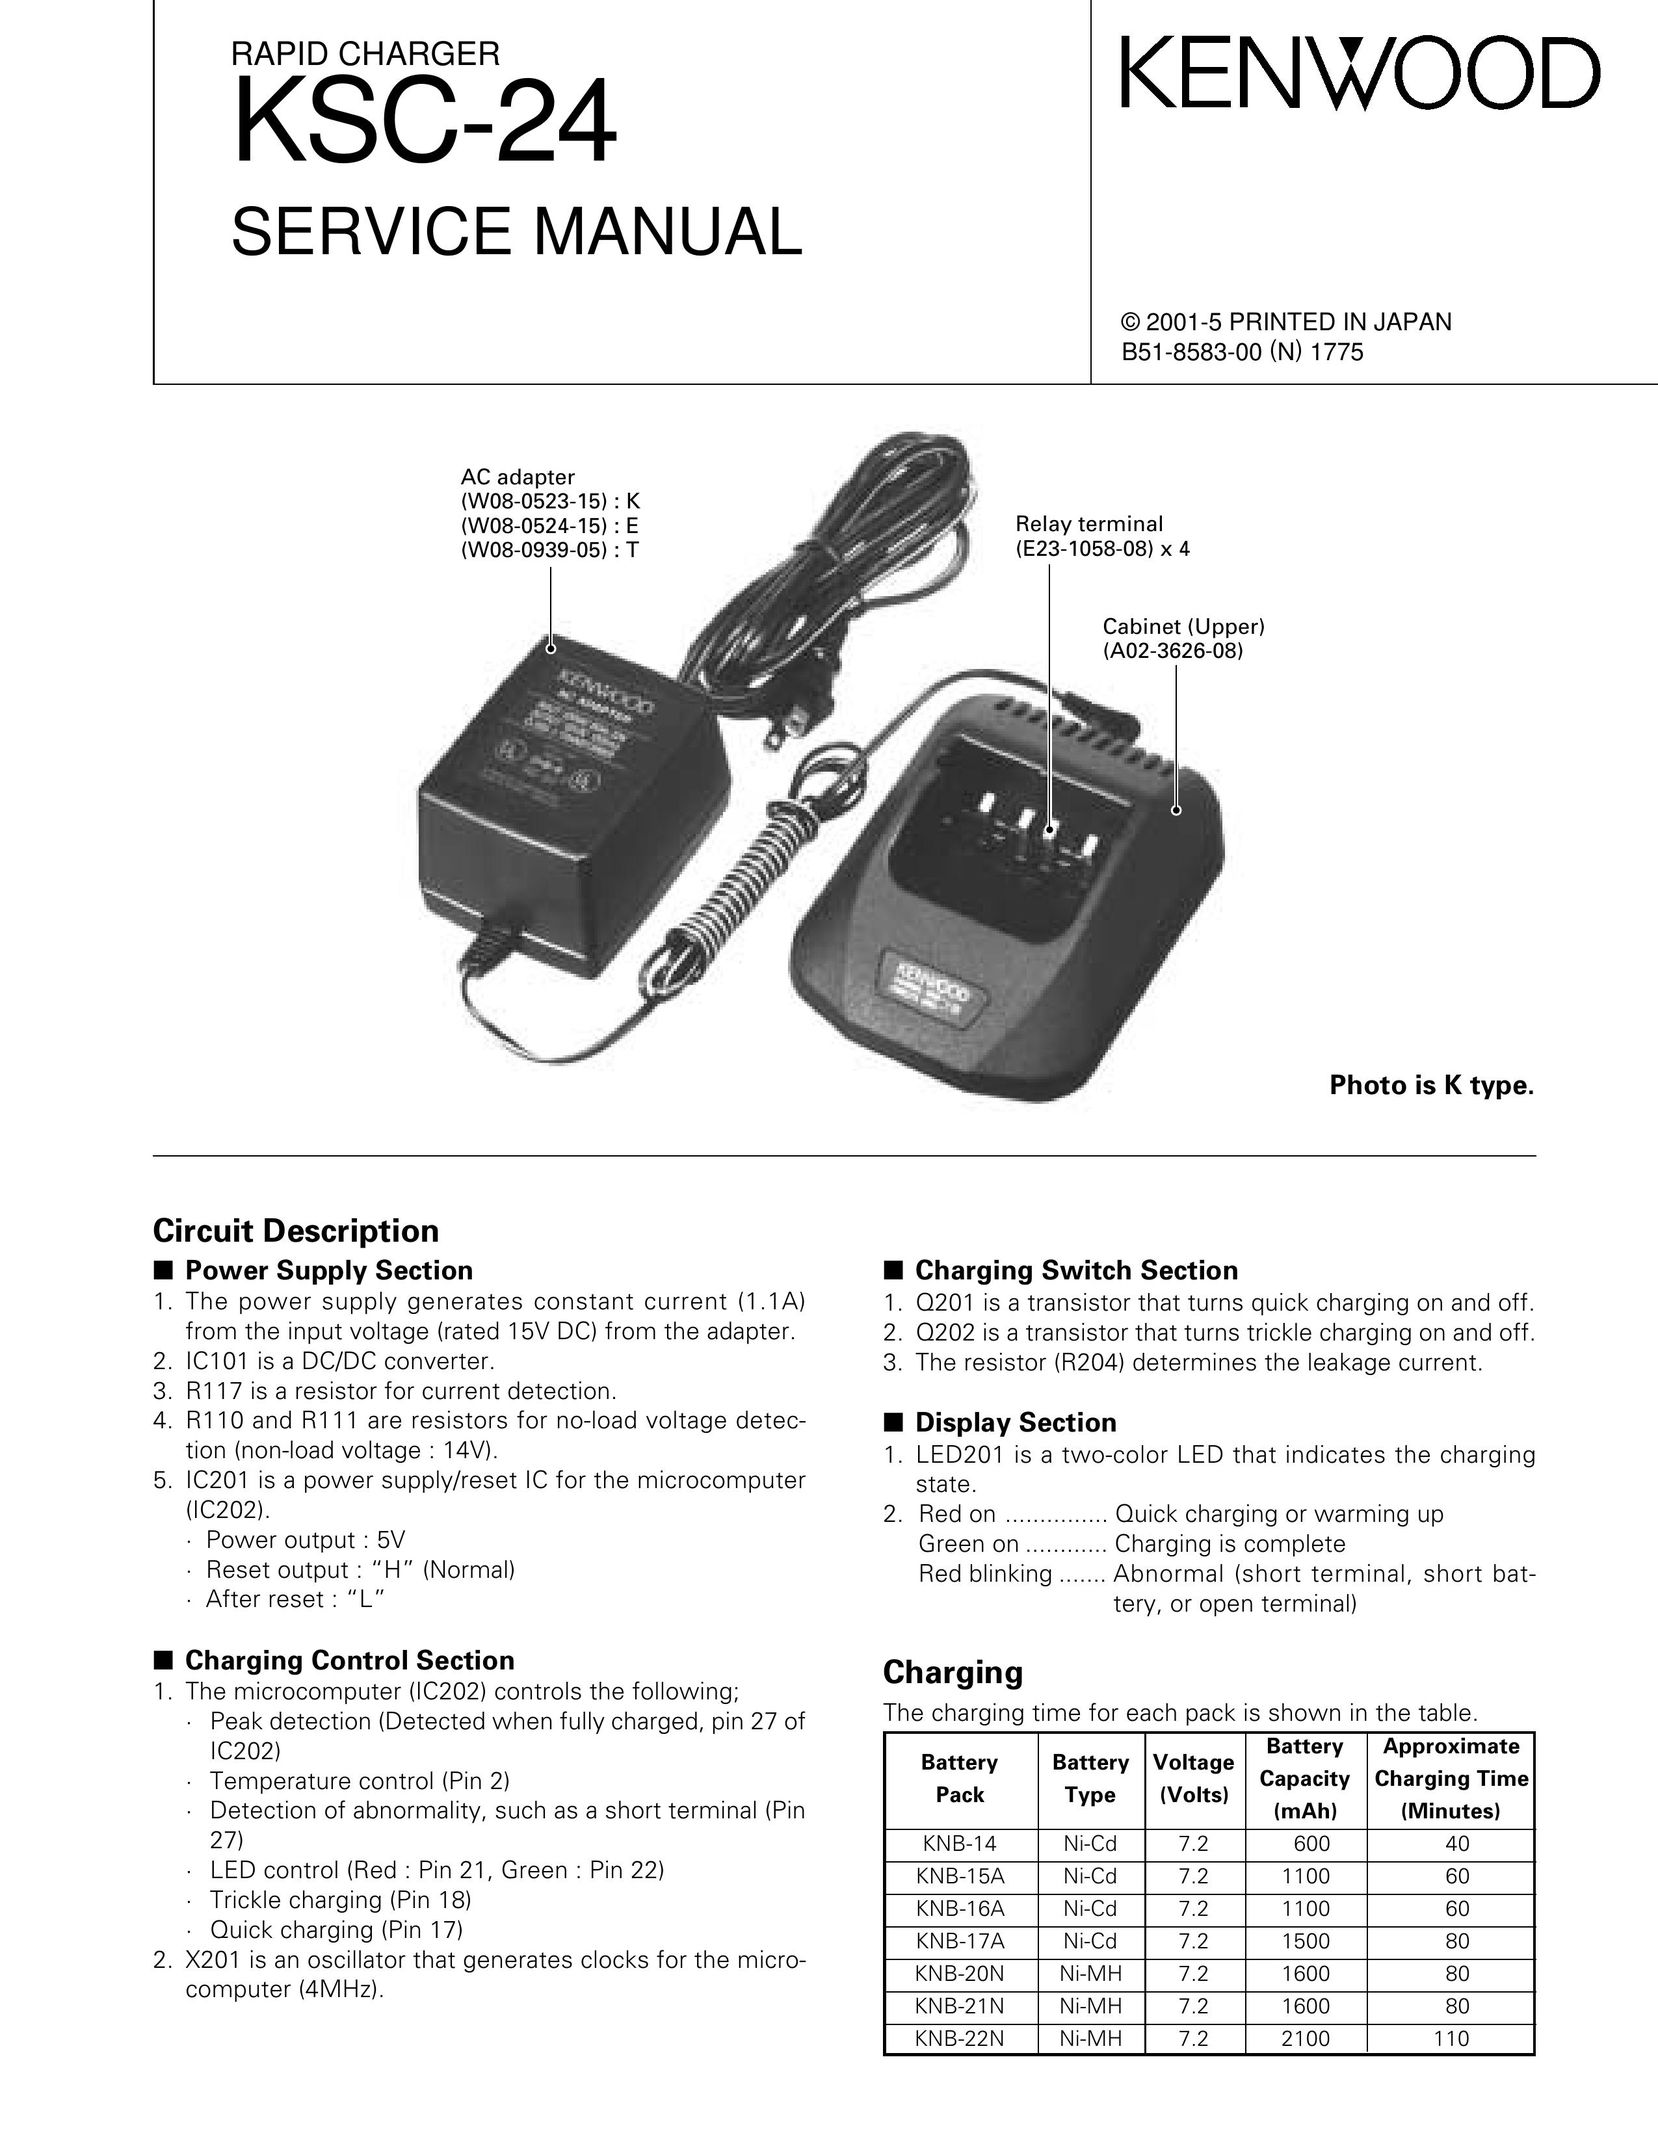 Kenwood KSC-24 Battery Charger User Manual